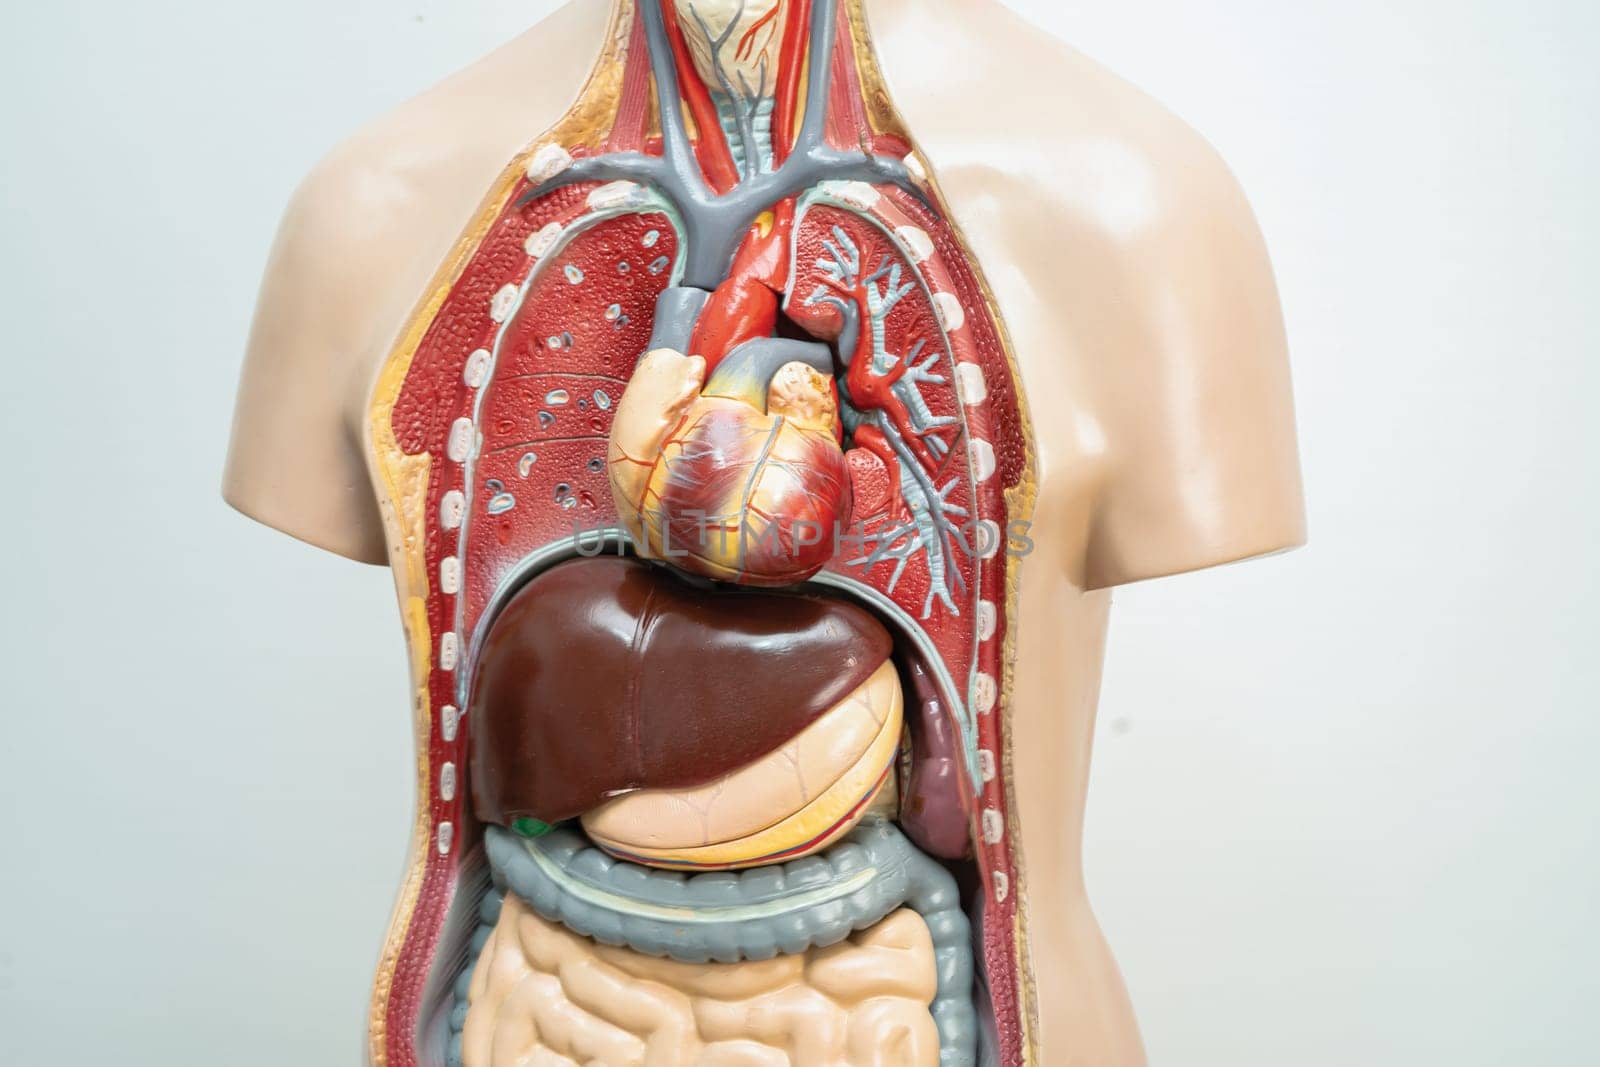 Human model anatomy for medical training course, teaching medicine education.